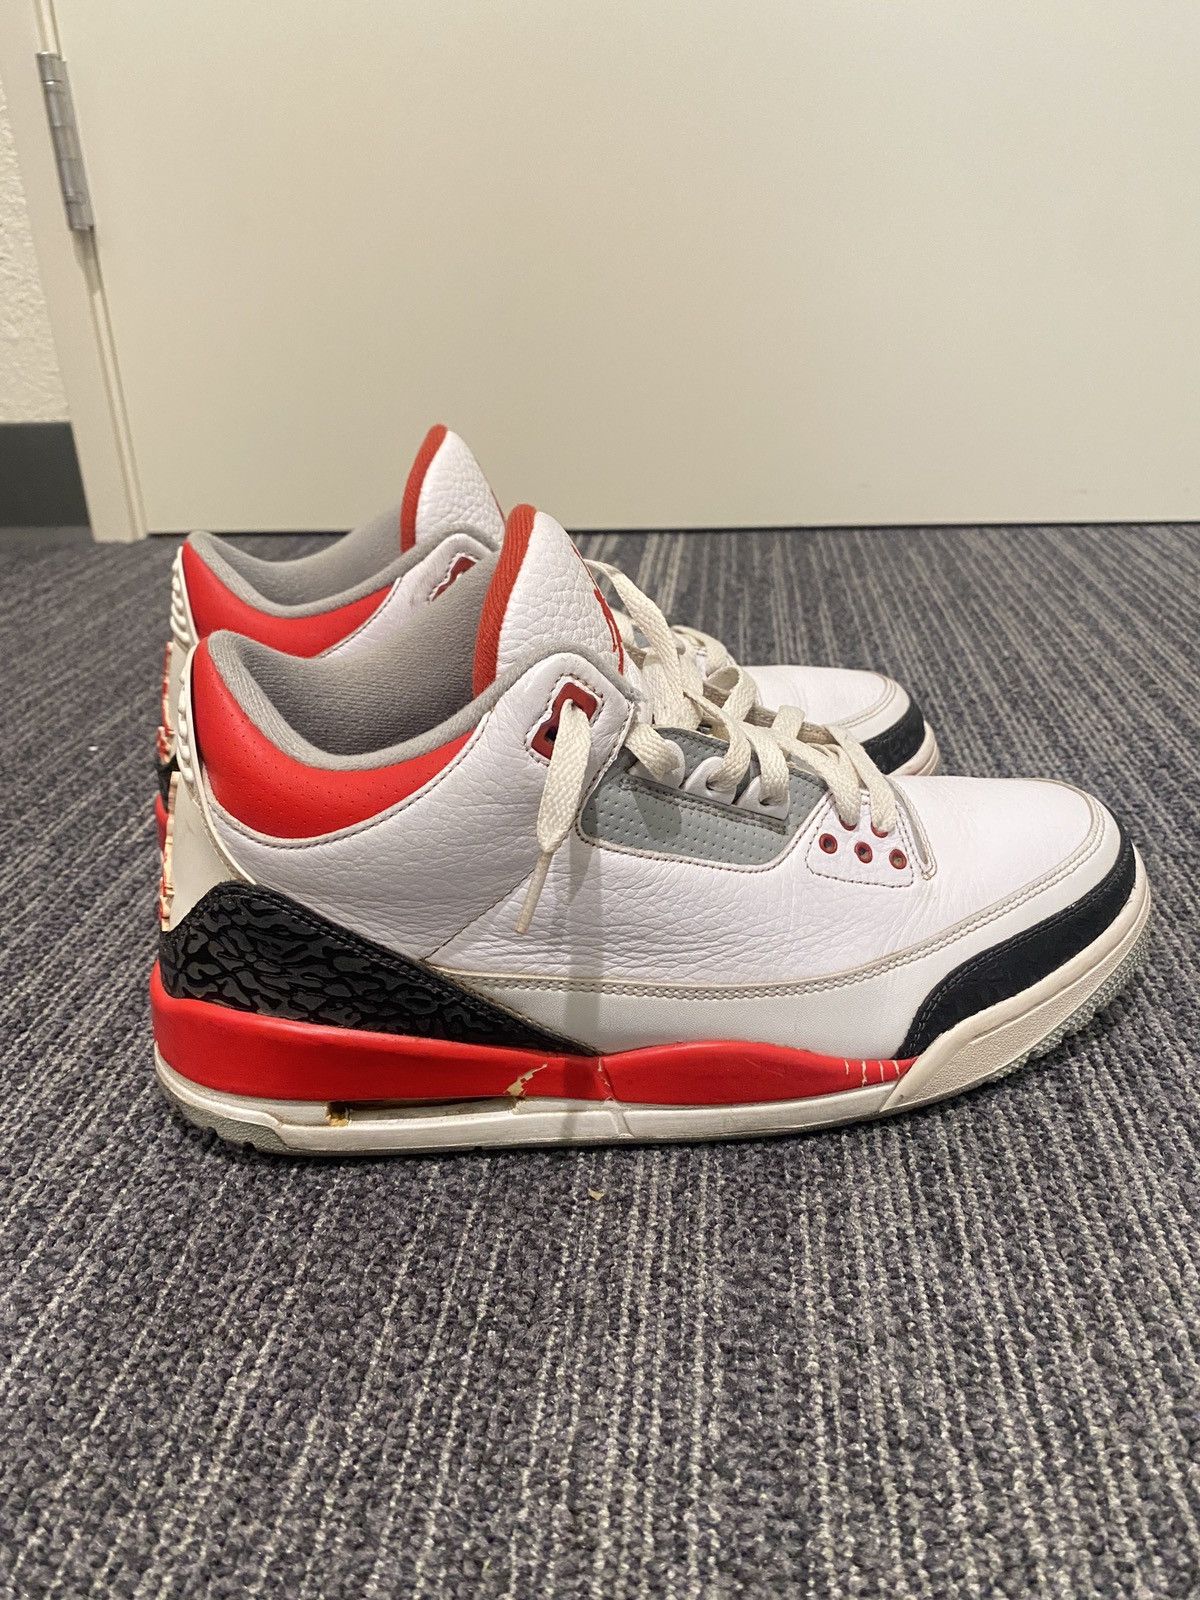 Pre-owned Jordan Brand Air Jordan 3 Retro Fire Red 2013 Shoes In White